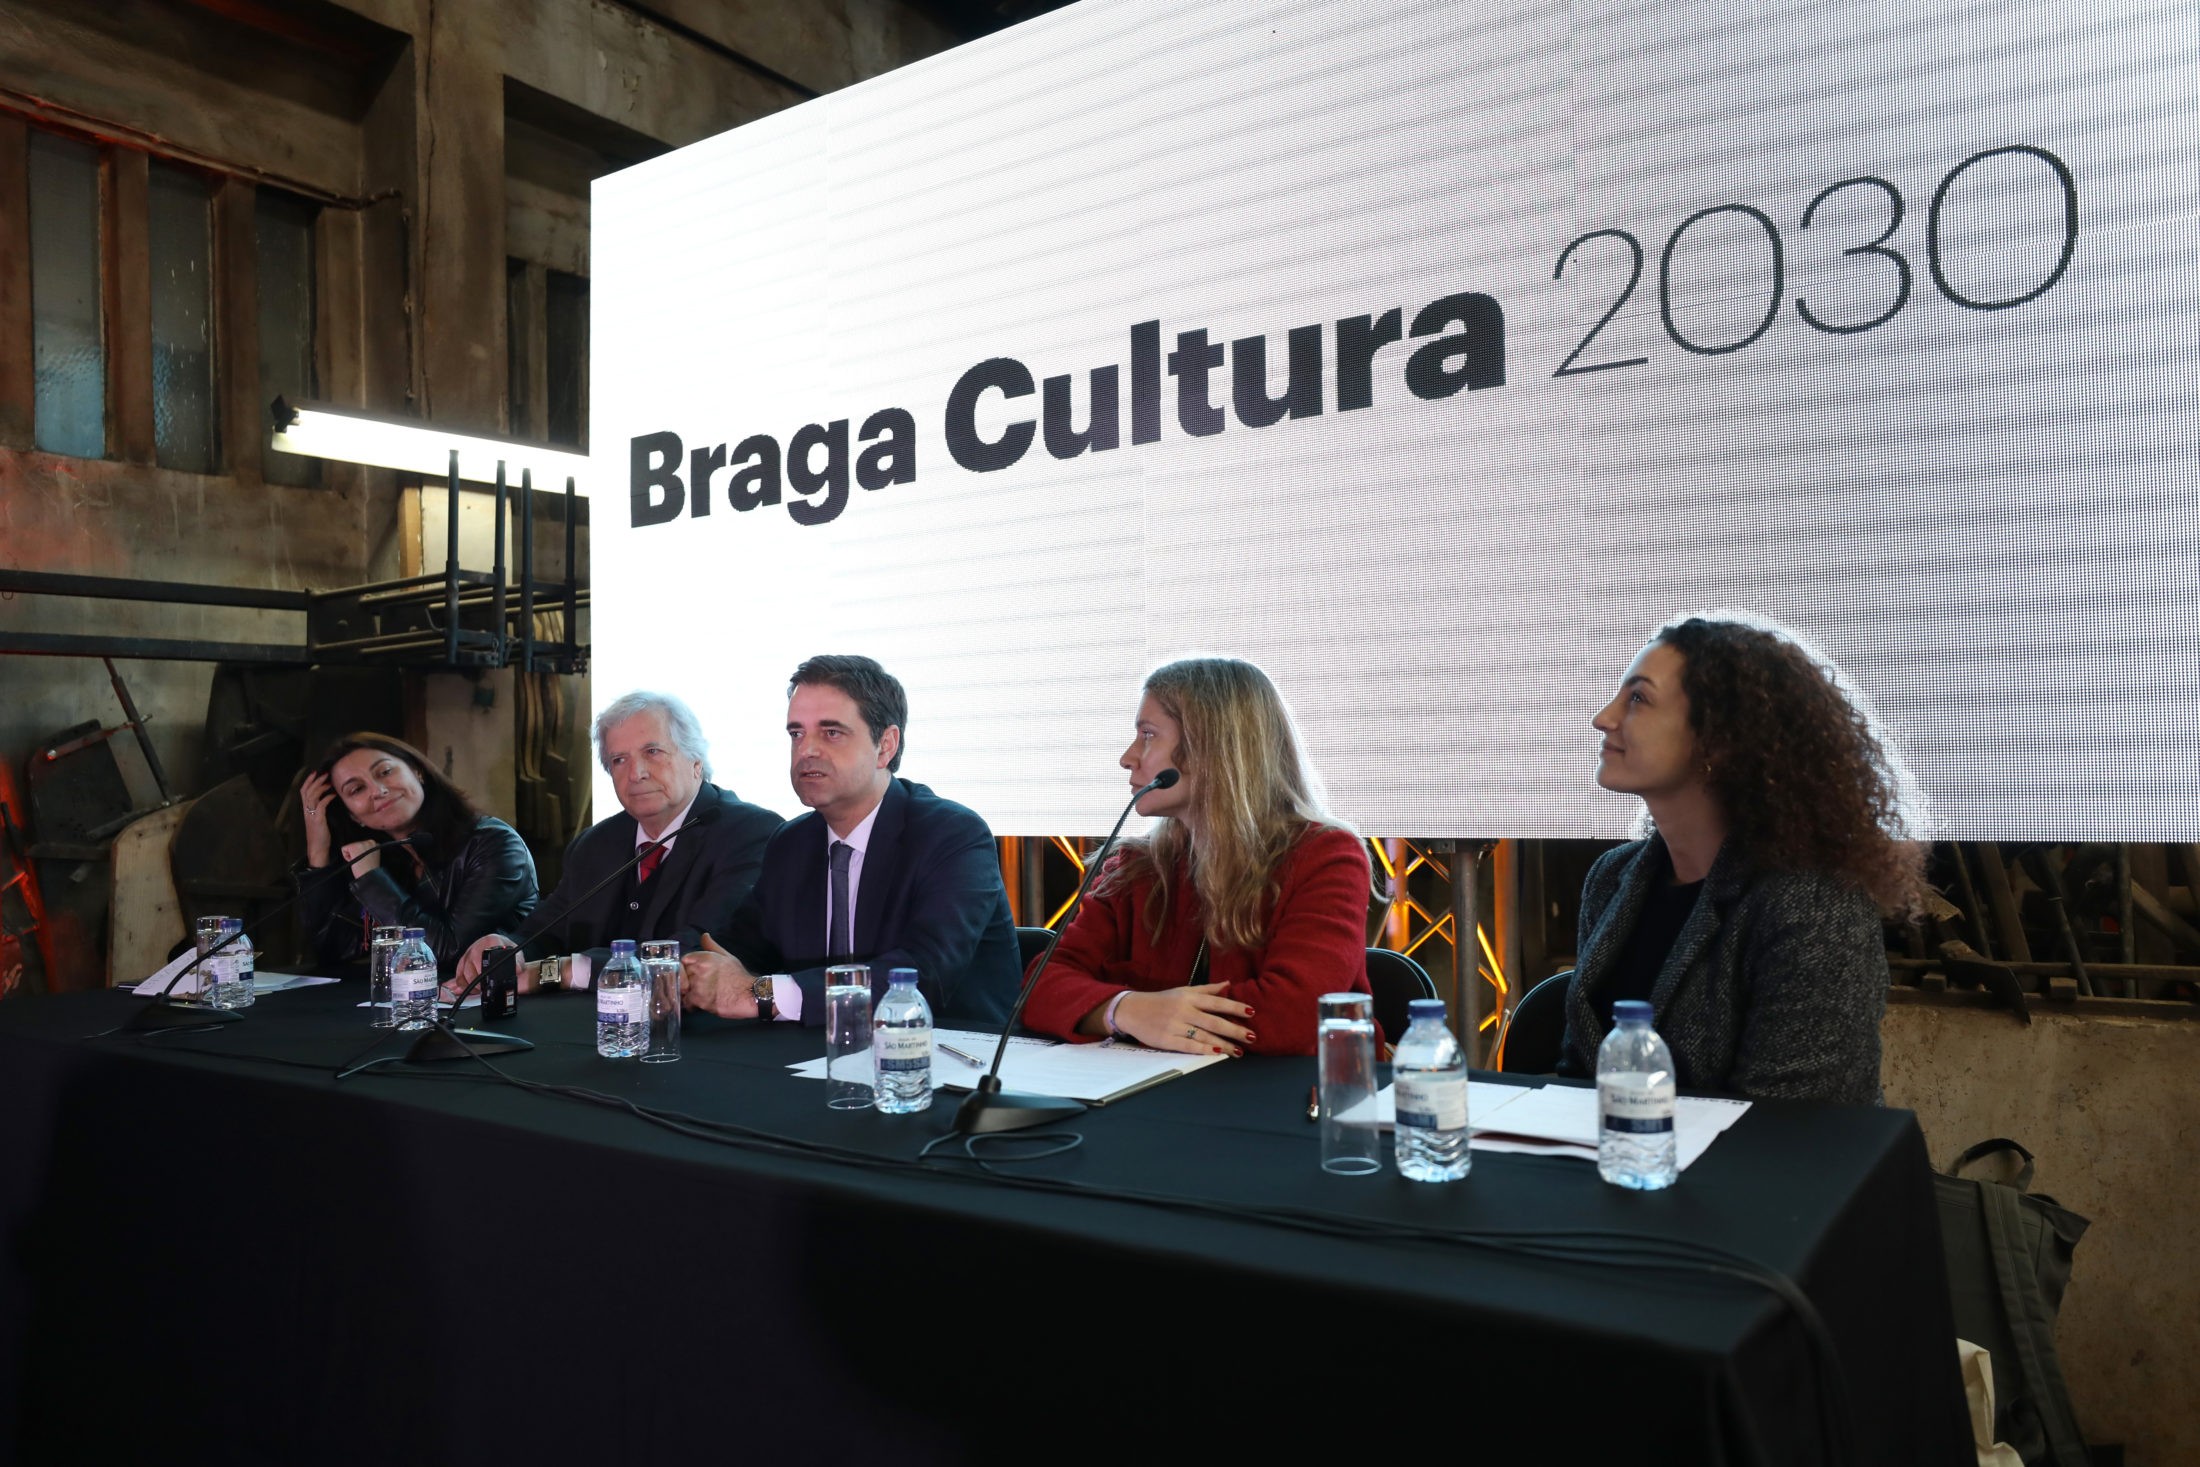 Processo da Capital da Cultura vai definir o futuro de Braga